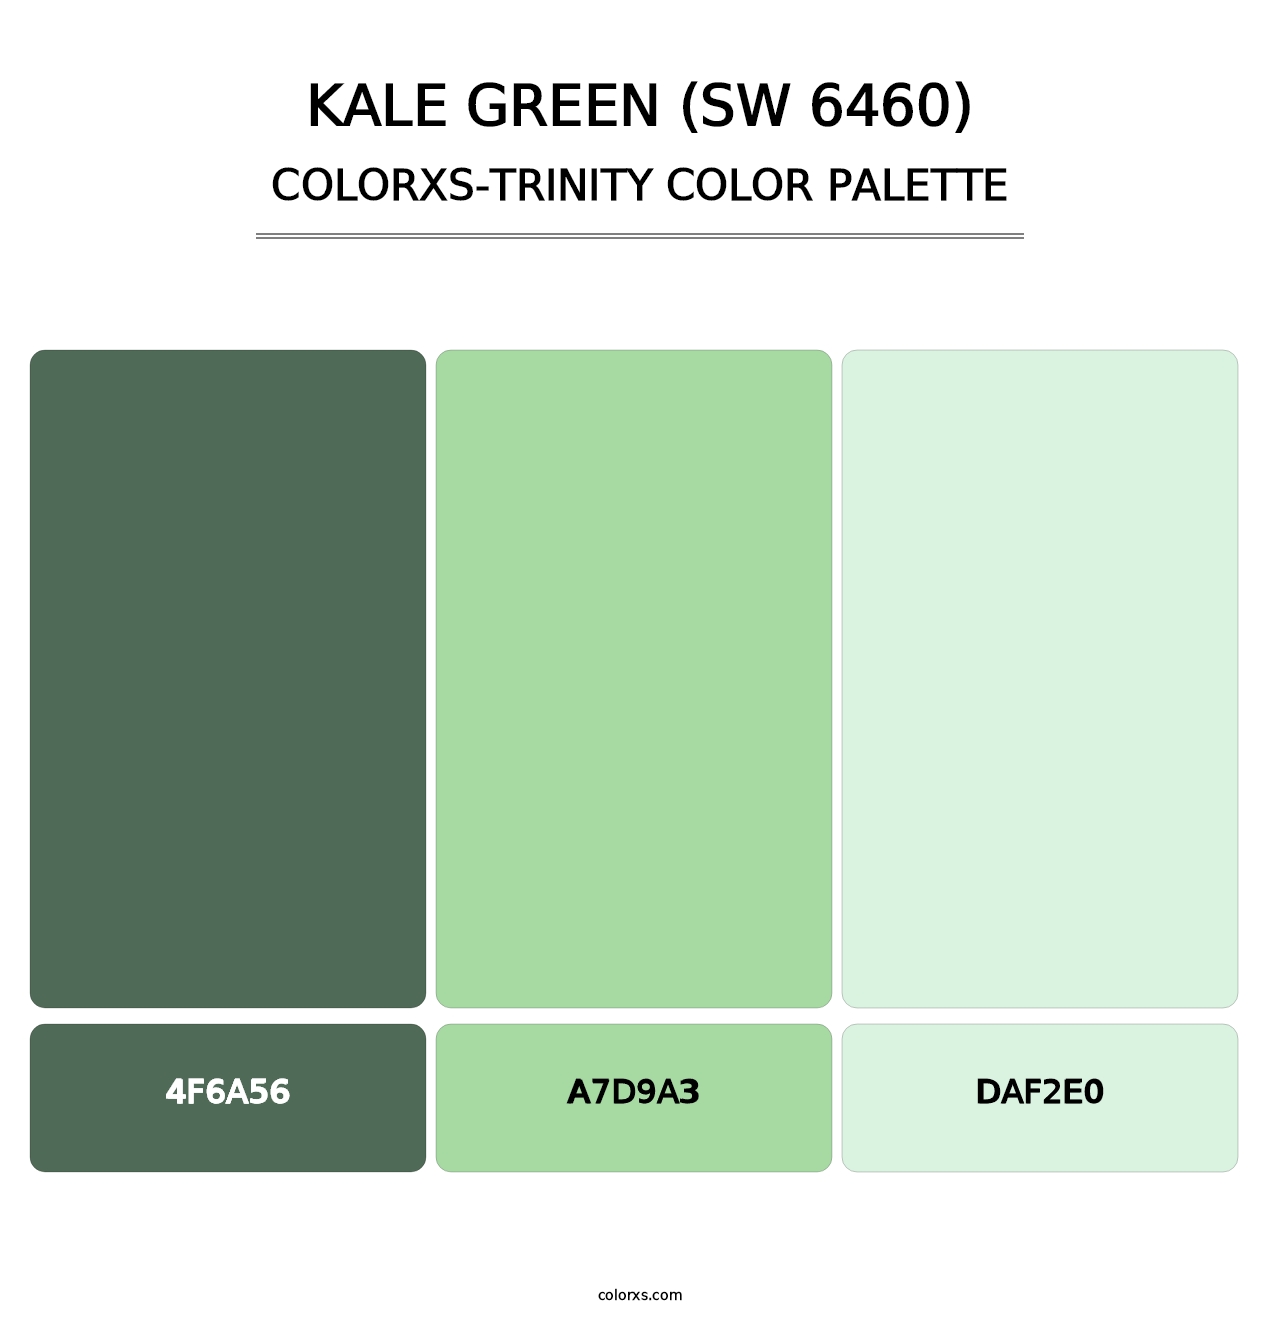 Kale Green (SW 6460) - Colorxs Trinity Palette